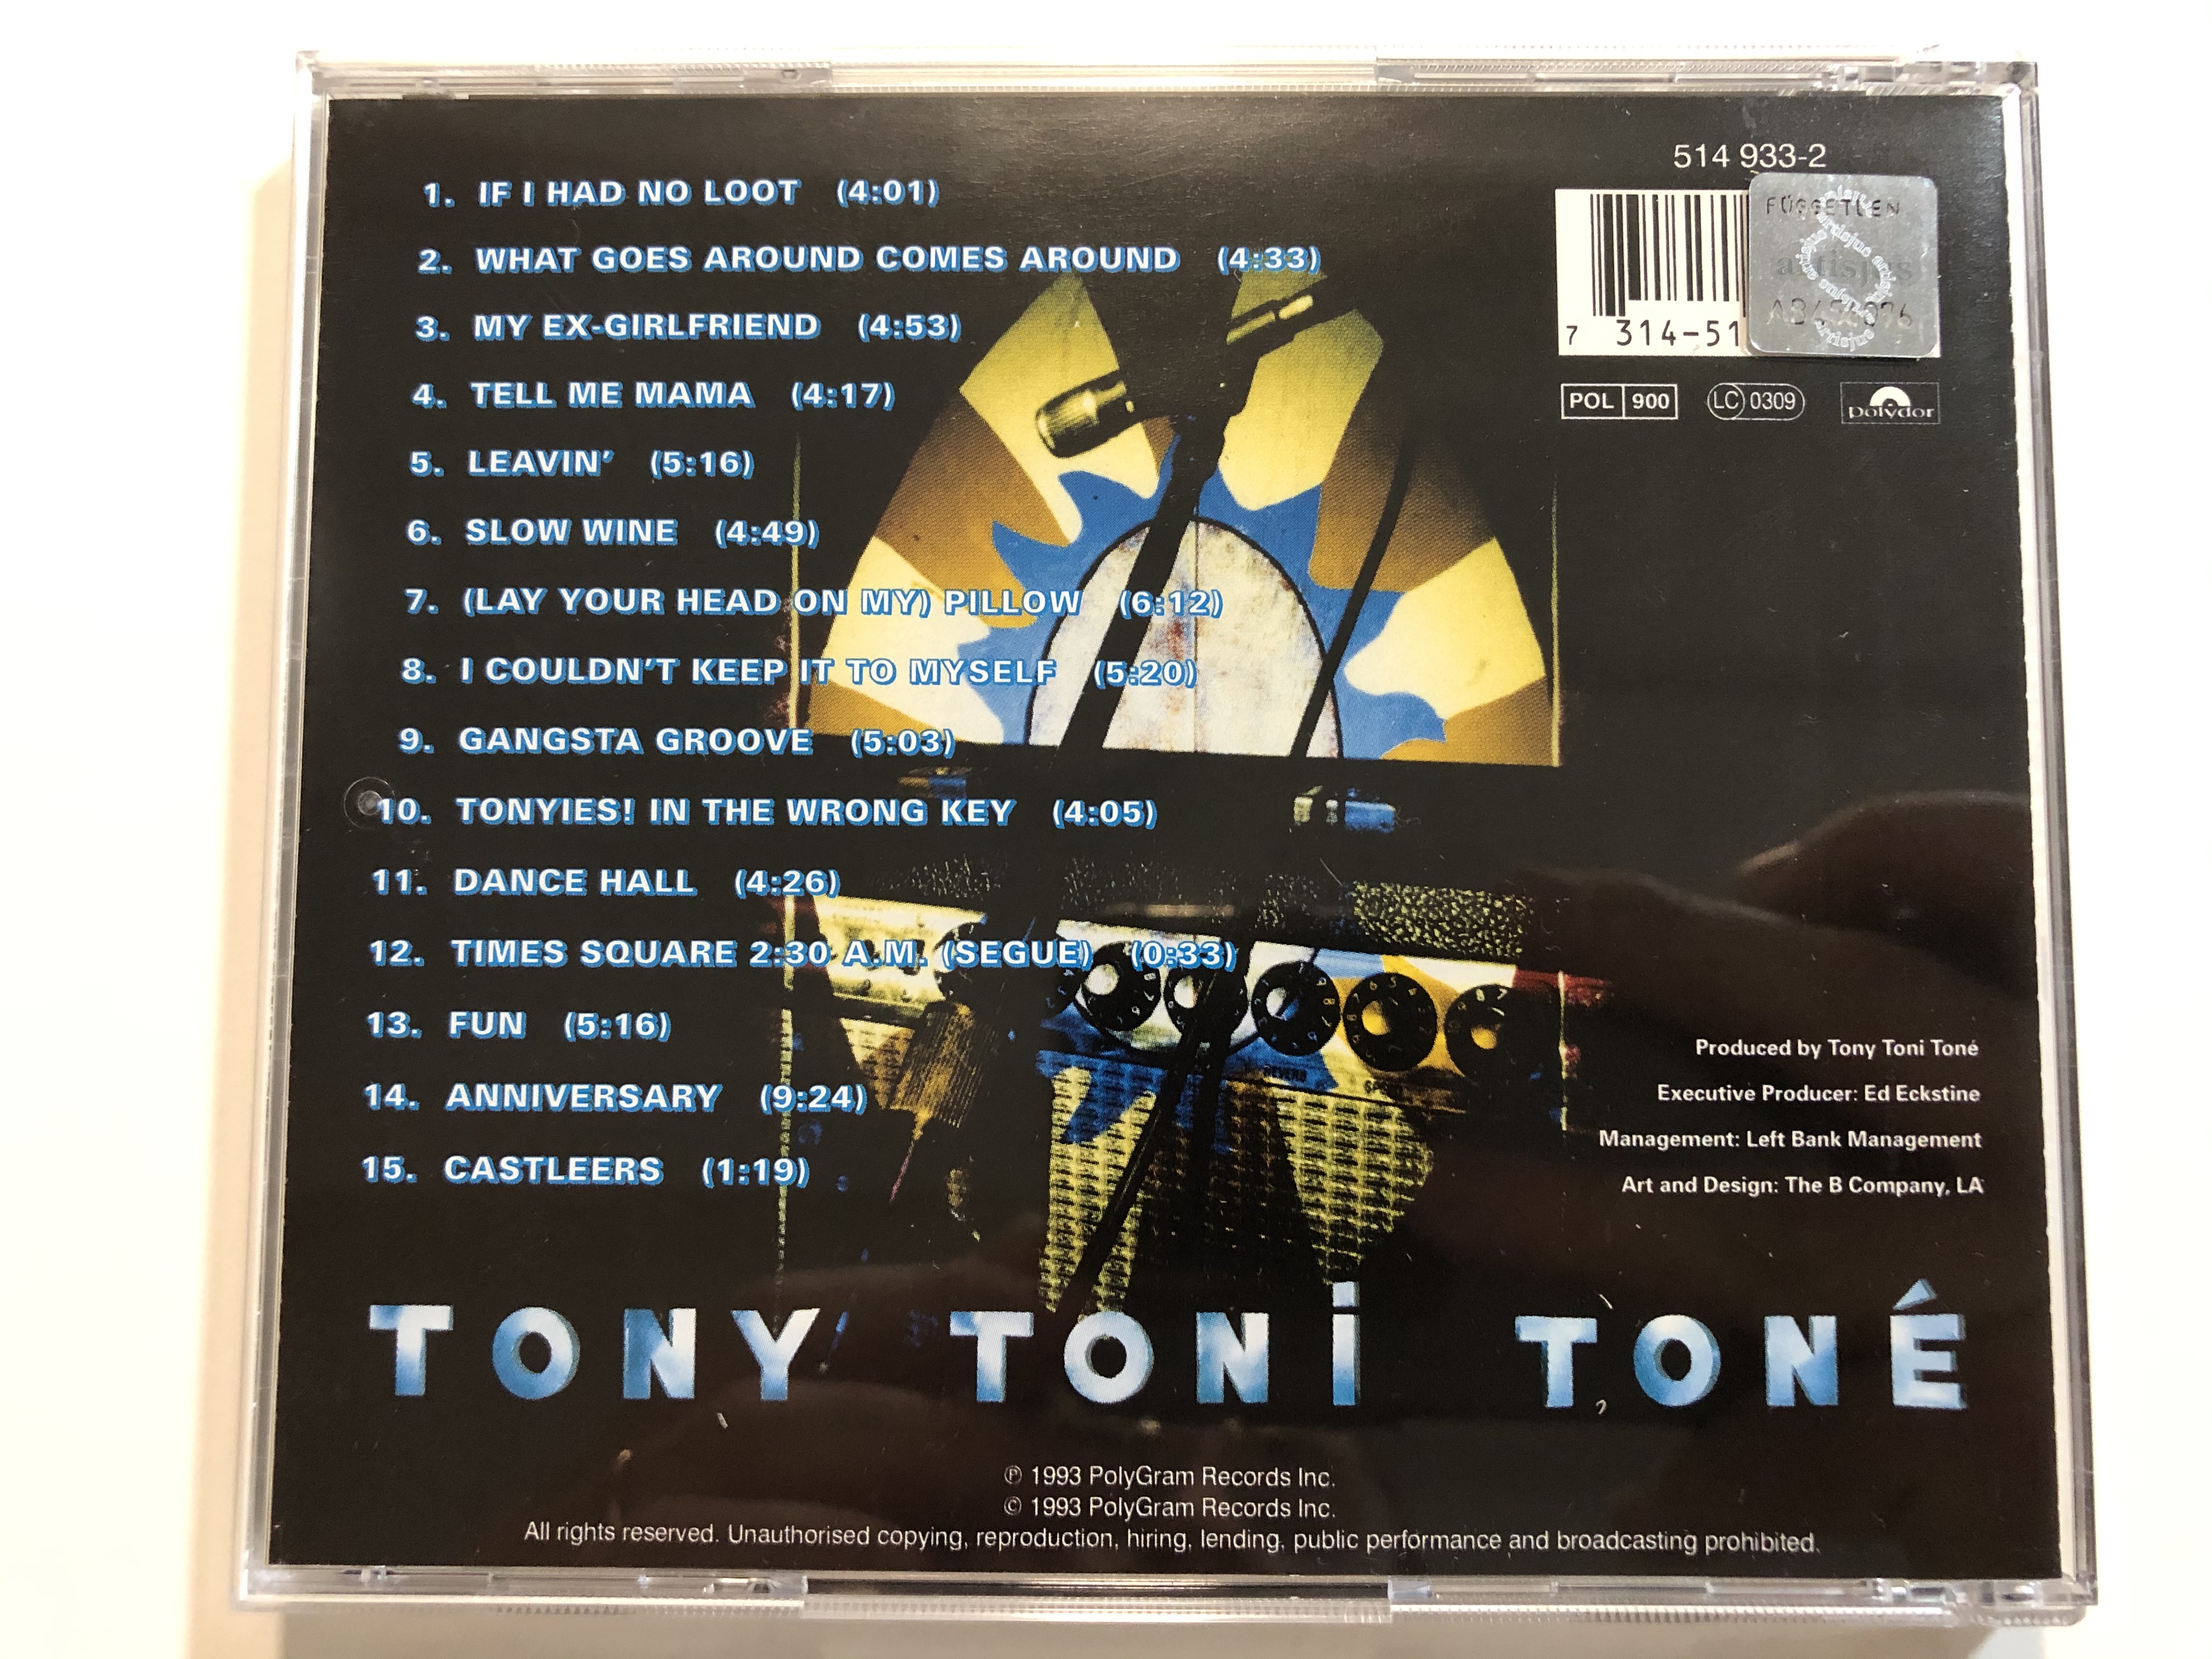 tony-toni-ton-sons-of-soul-polydor-audio-cd-1993-514-933-2-2-.jpg